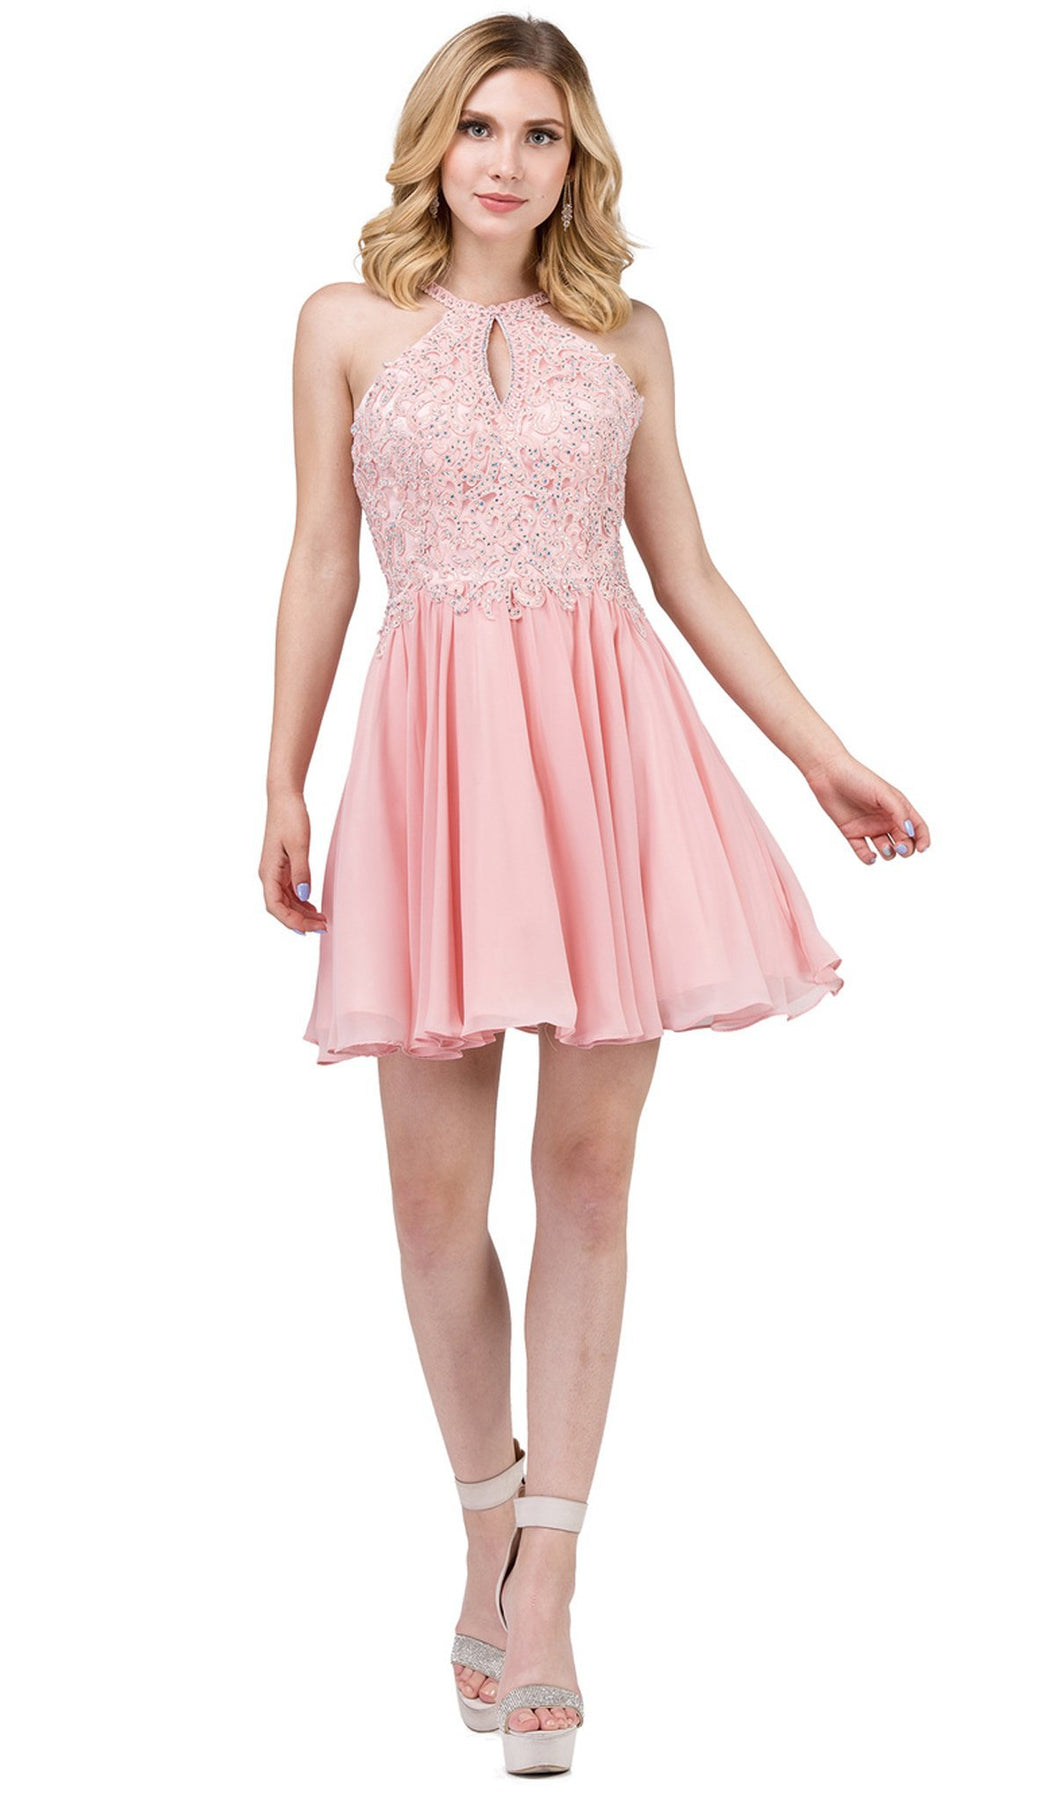 Dancing Queen - 3043 Beaded Lace Halter Homecoming Dress in Pink